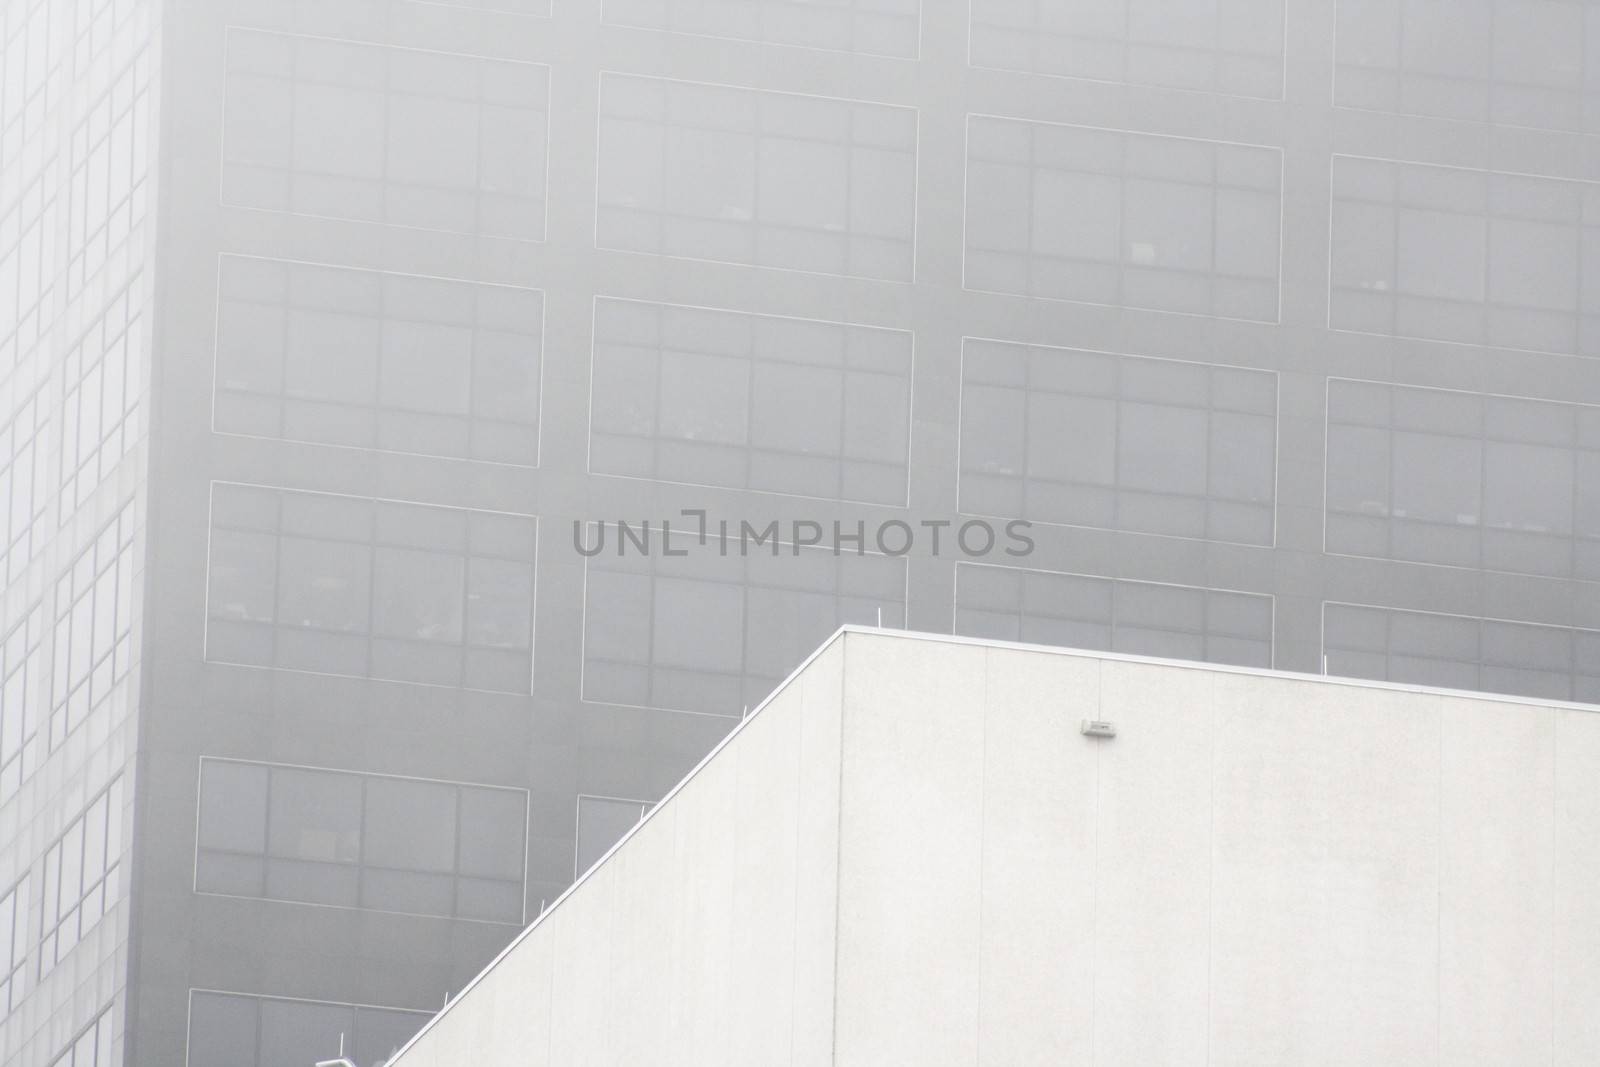 Building in Fog  by tornado98